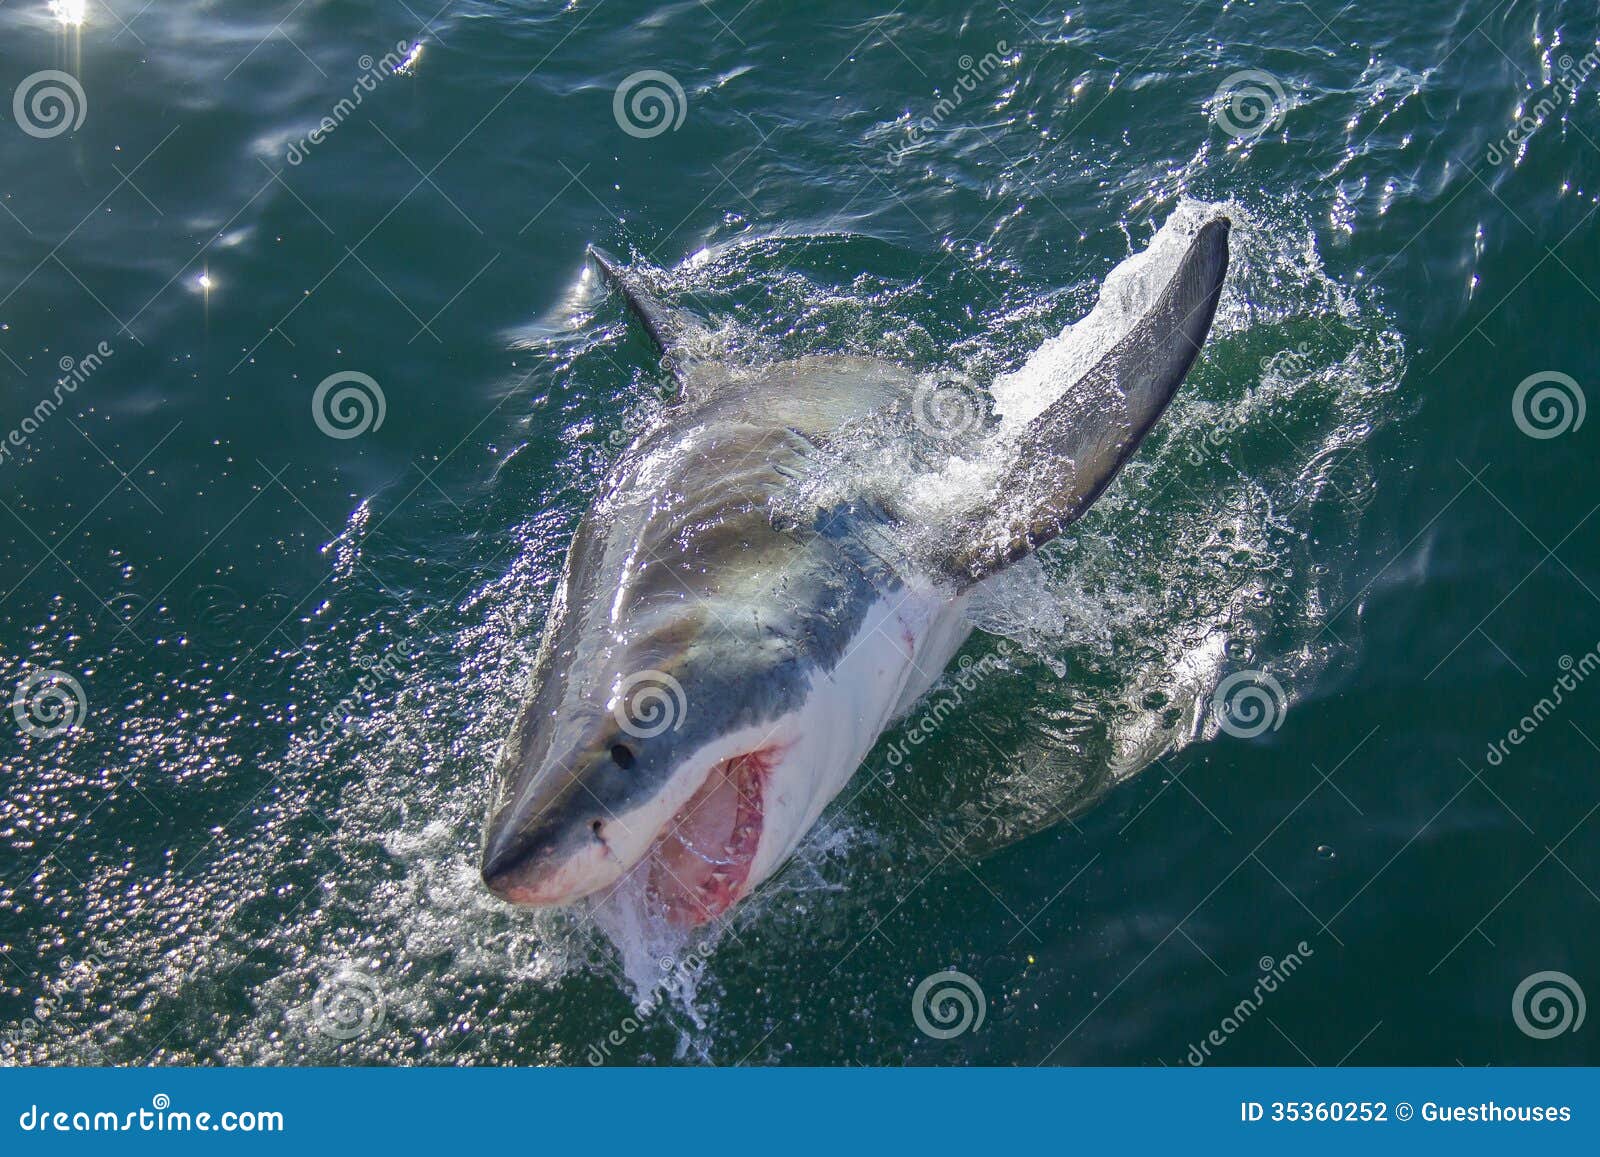 shark breaching the ocean